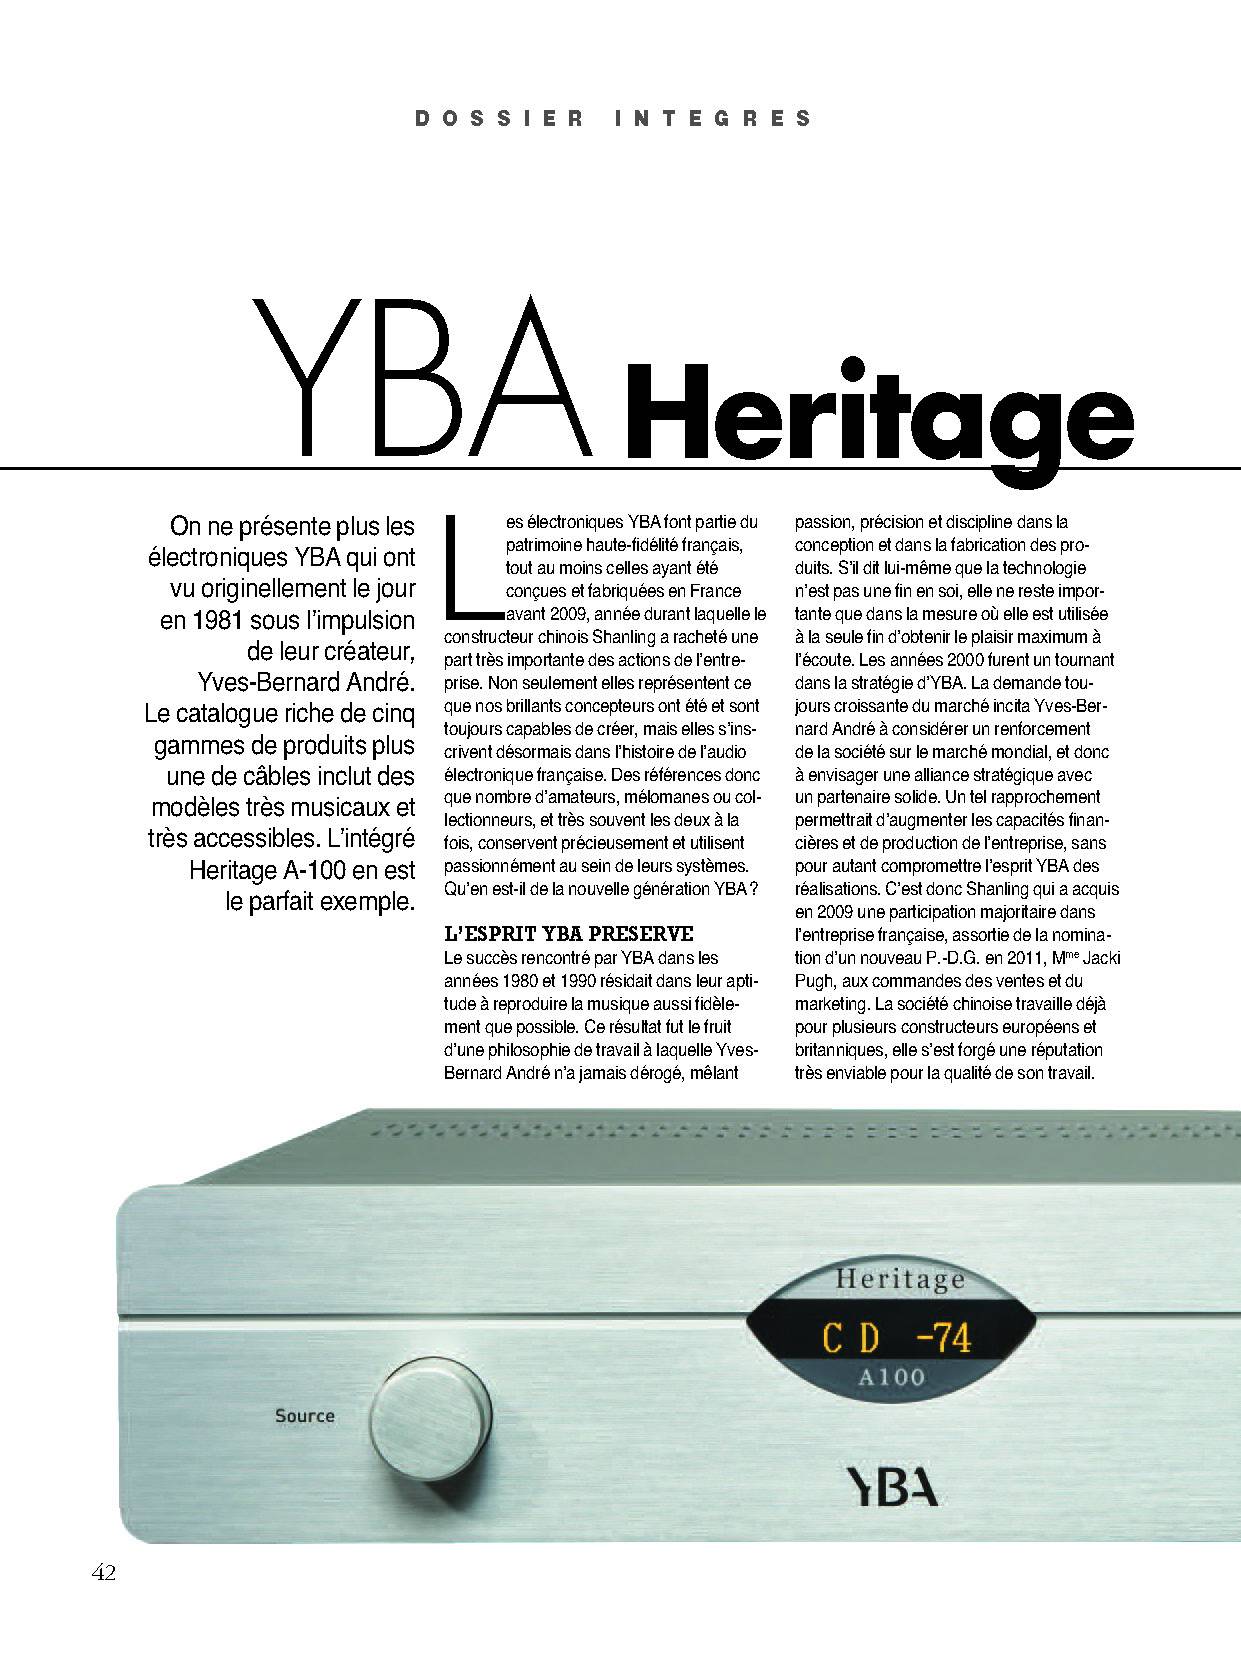 YBA Heritage A100